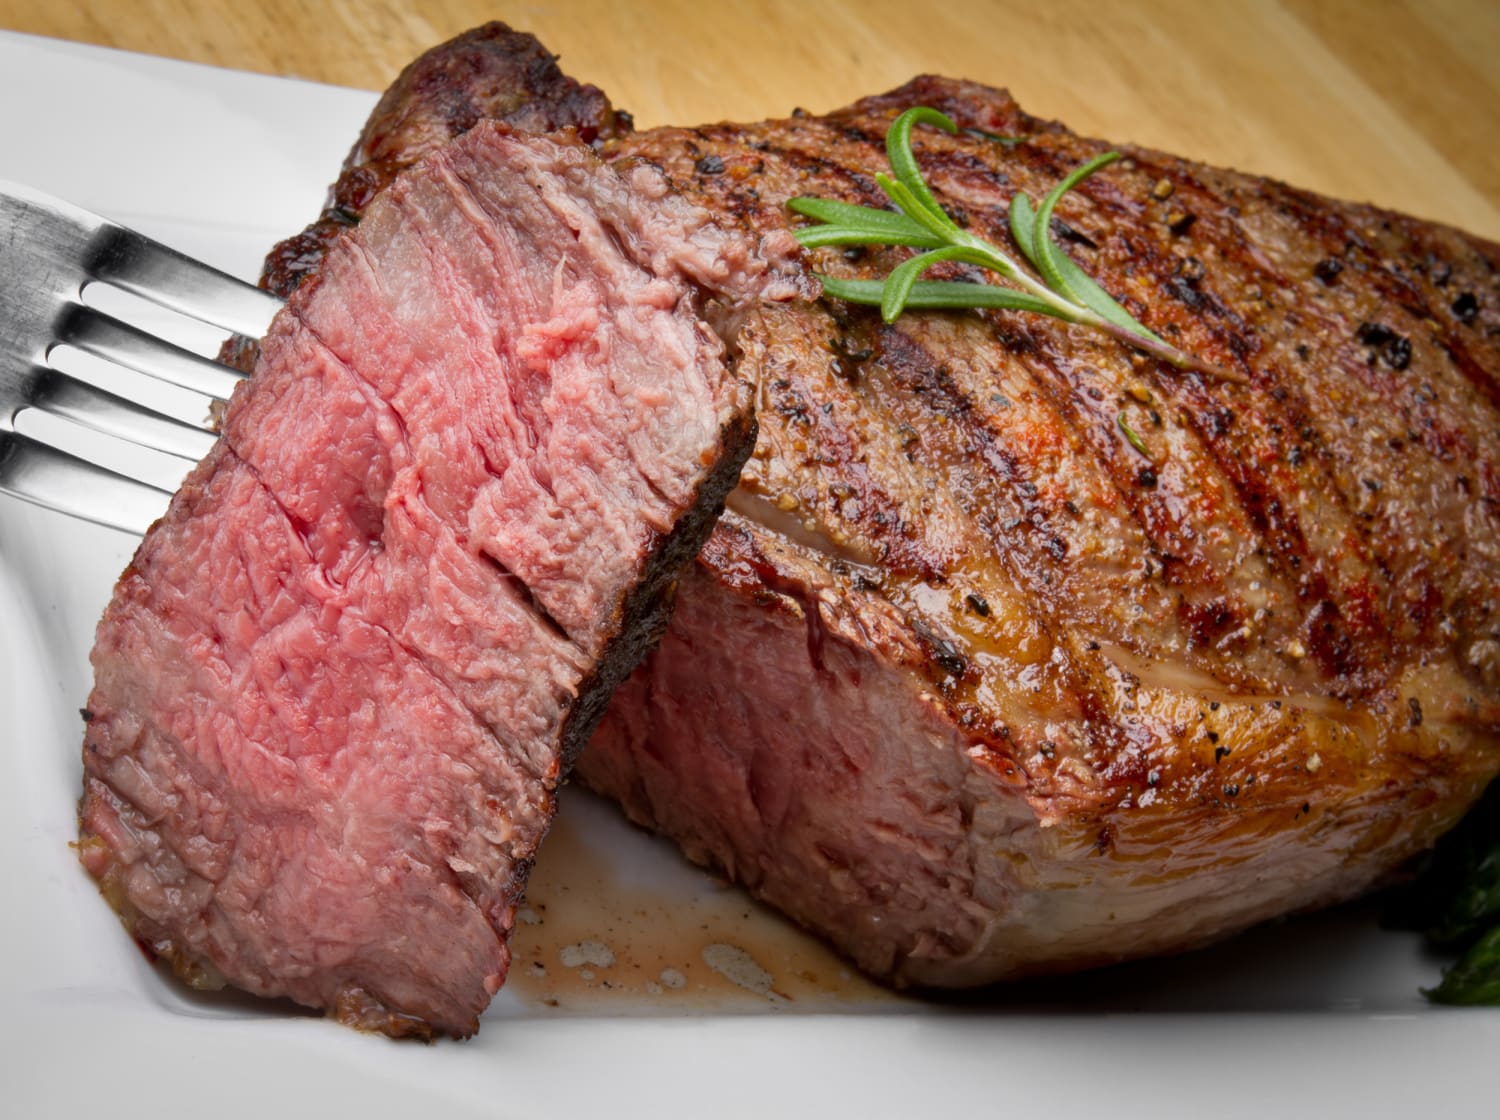 https://media-cldnry.s-nbcnews.com/image/upload/newscms/2020_04/1531868/cooking-steak-medium-rare-today-inline-200124.jpg